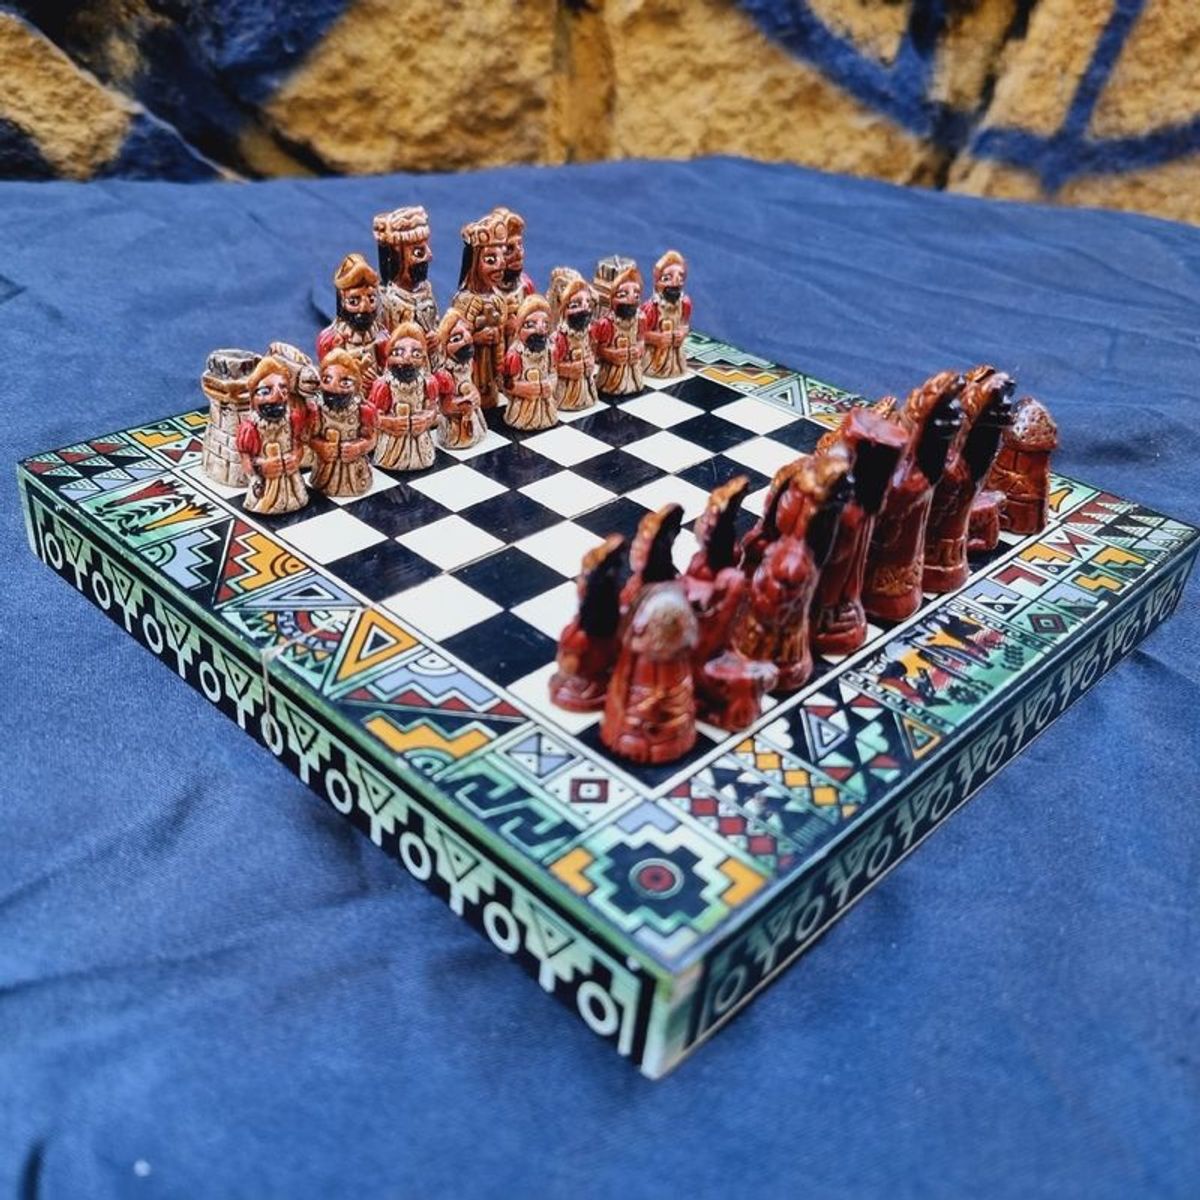 Qualidade premium e fascinante xadrez indiano - Alibaba.com